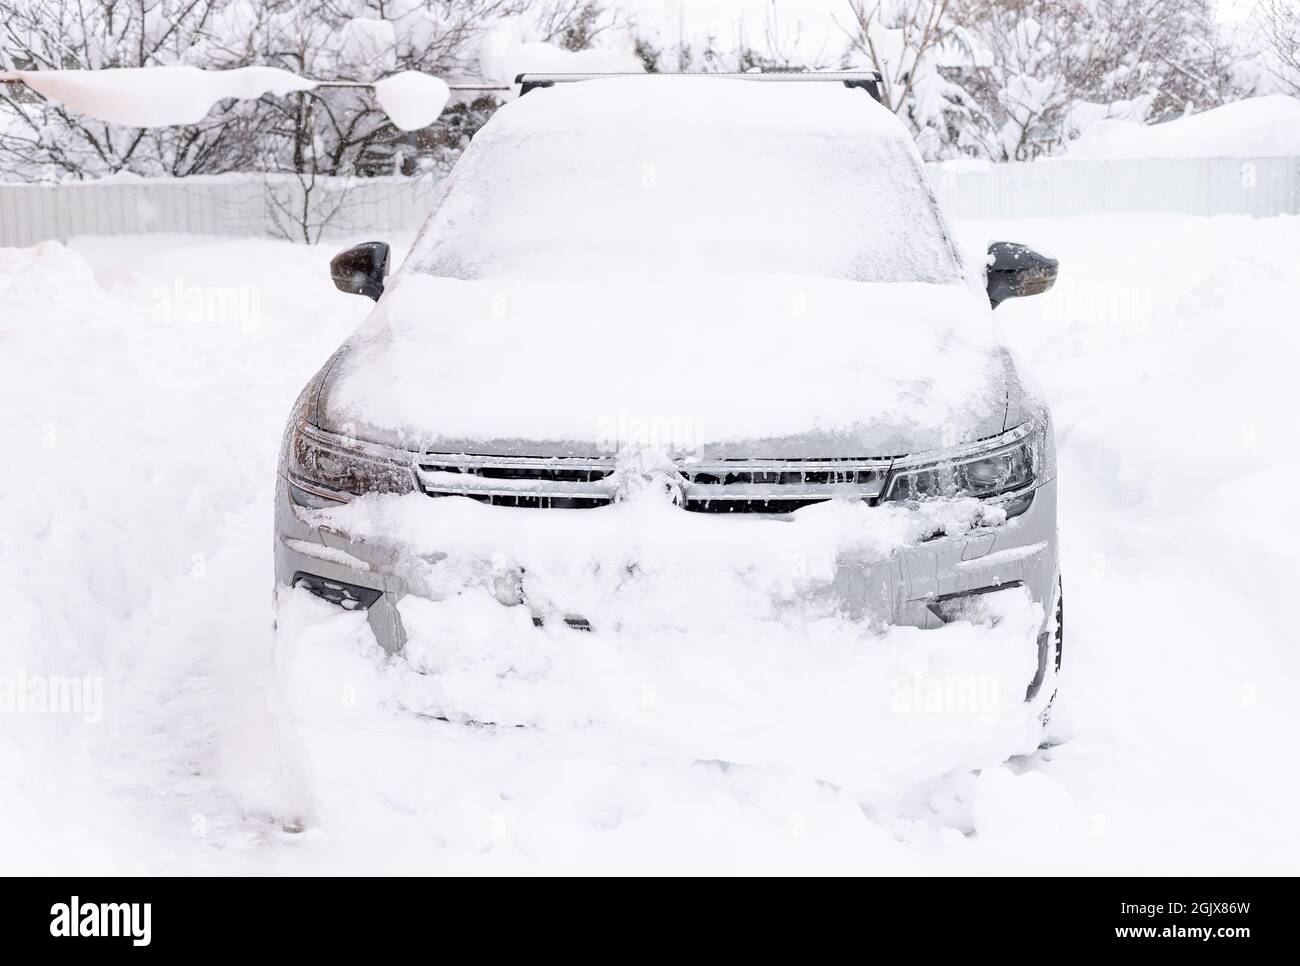 KRASNODAR, RUSSIA - February 16, 2021: Snow-covered Volkswagen Tiguan car on driveway Stock Photo